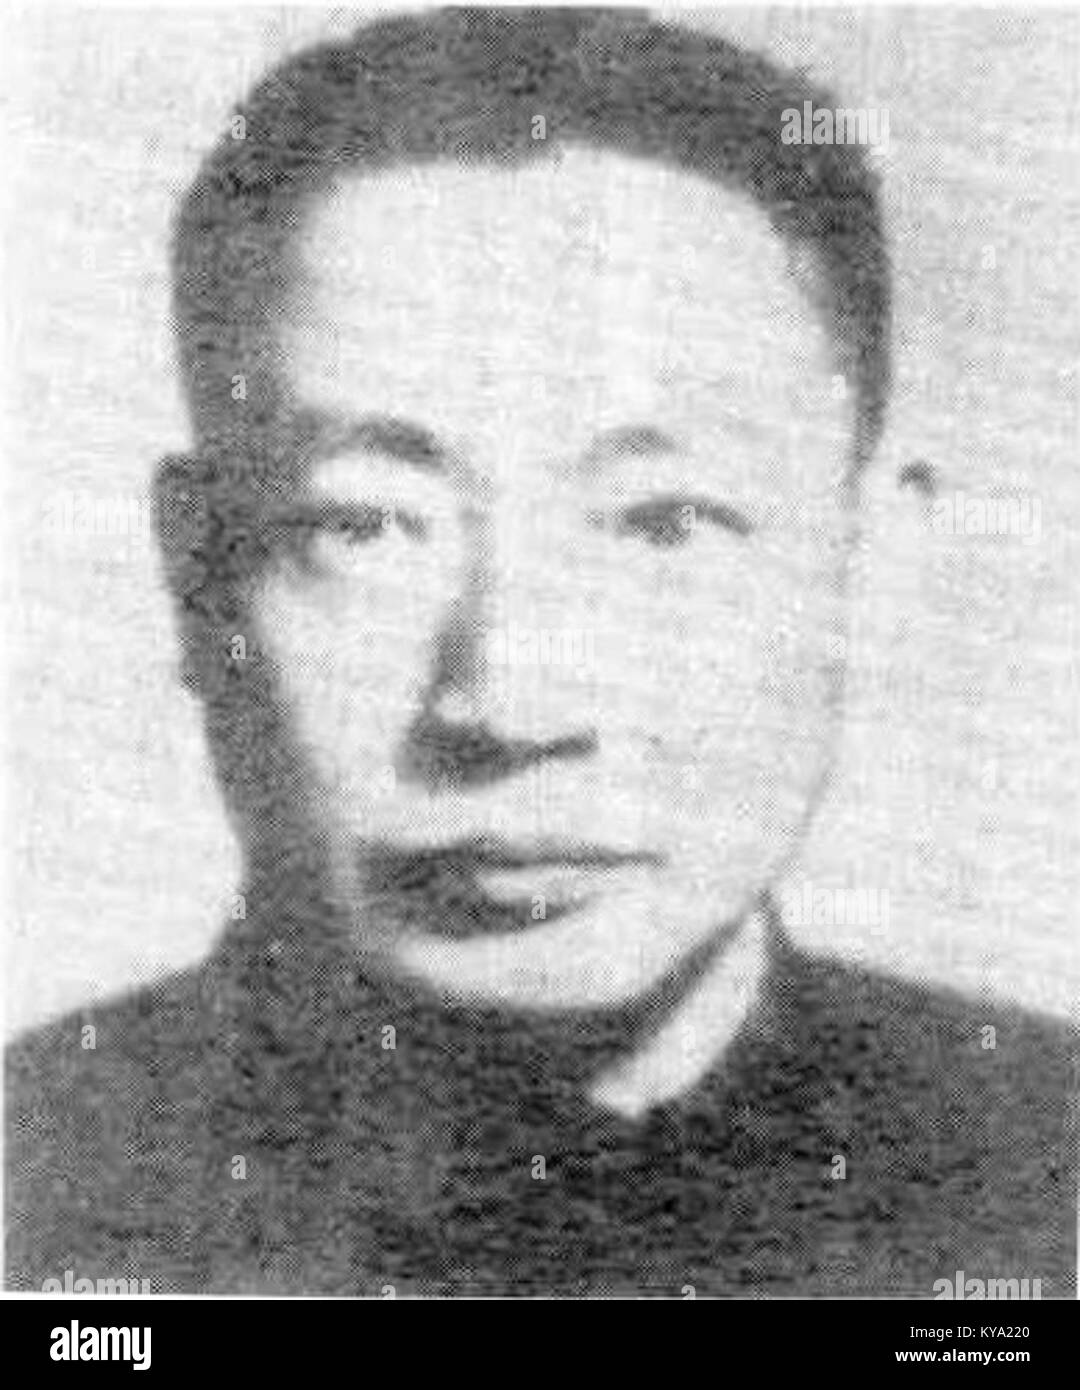 Китайский шпион притворялся женщиной. Китайский шпион. Химический генерал Мао. Фамилия Китаев. Картинка химический генерал Мао.